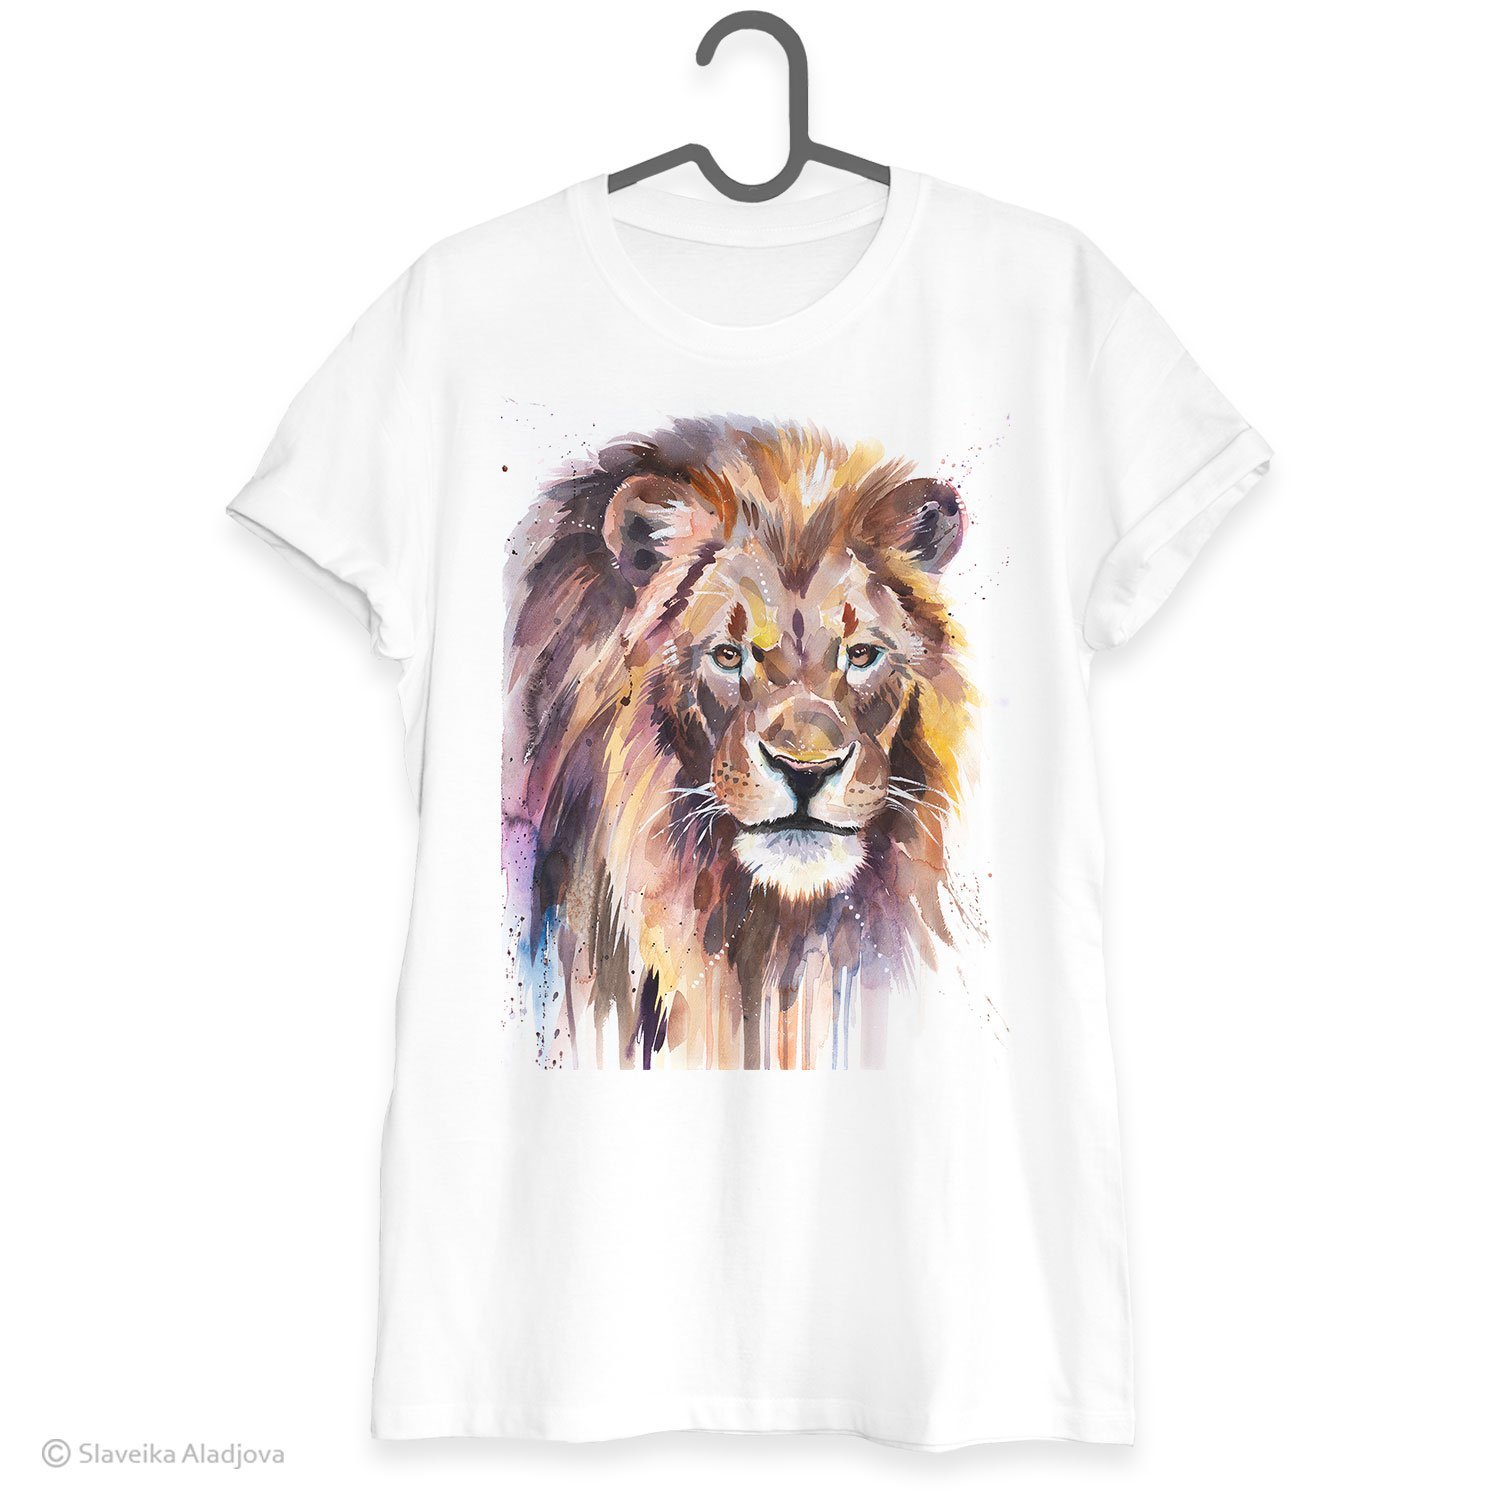 African Lion art T-shirt. Art by Slaveika Aladjova.